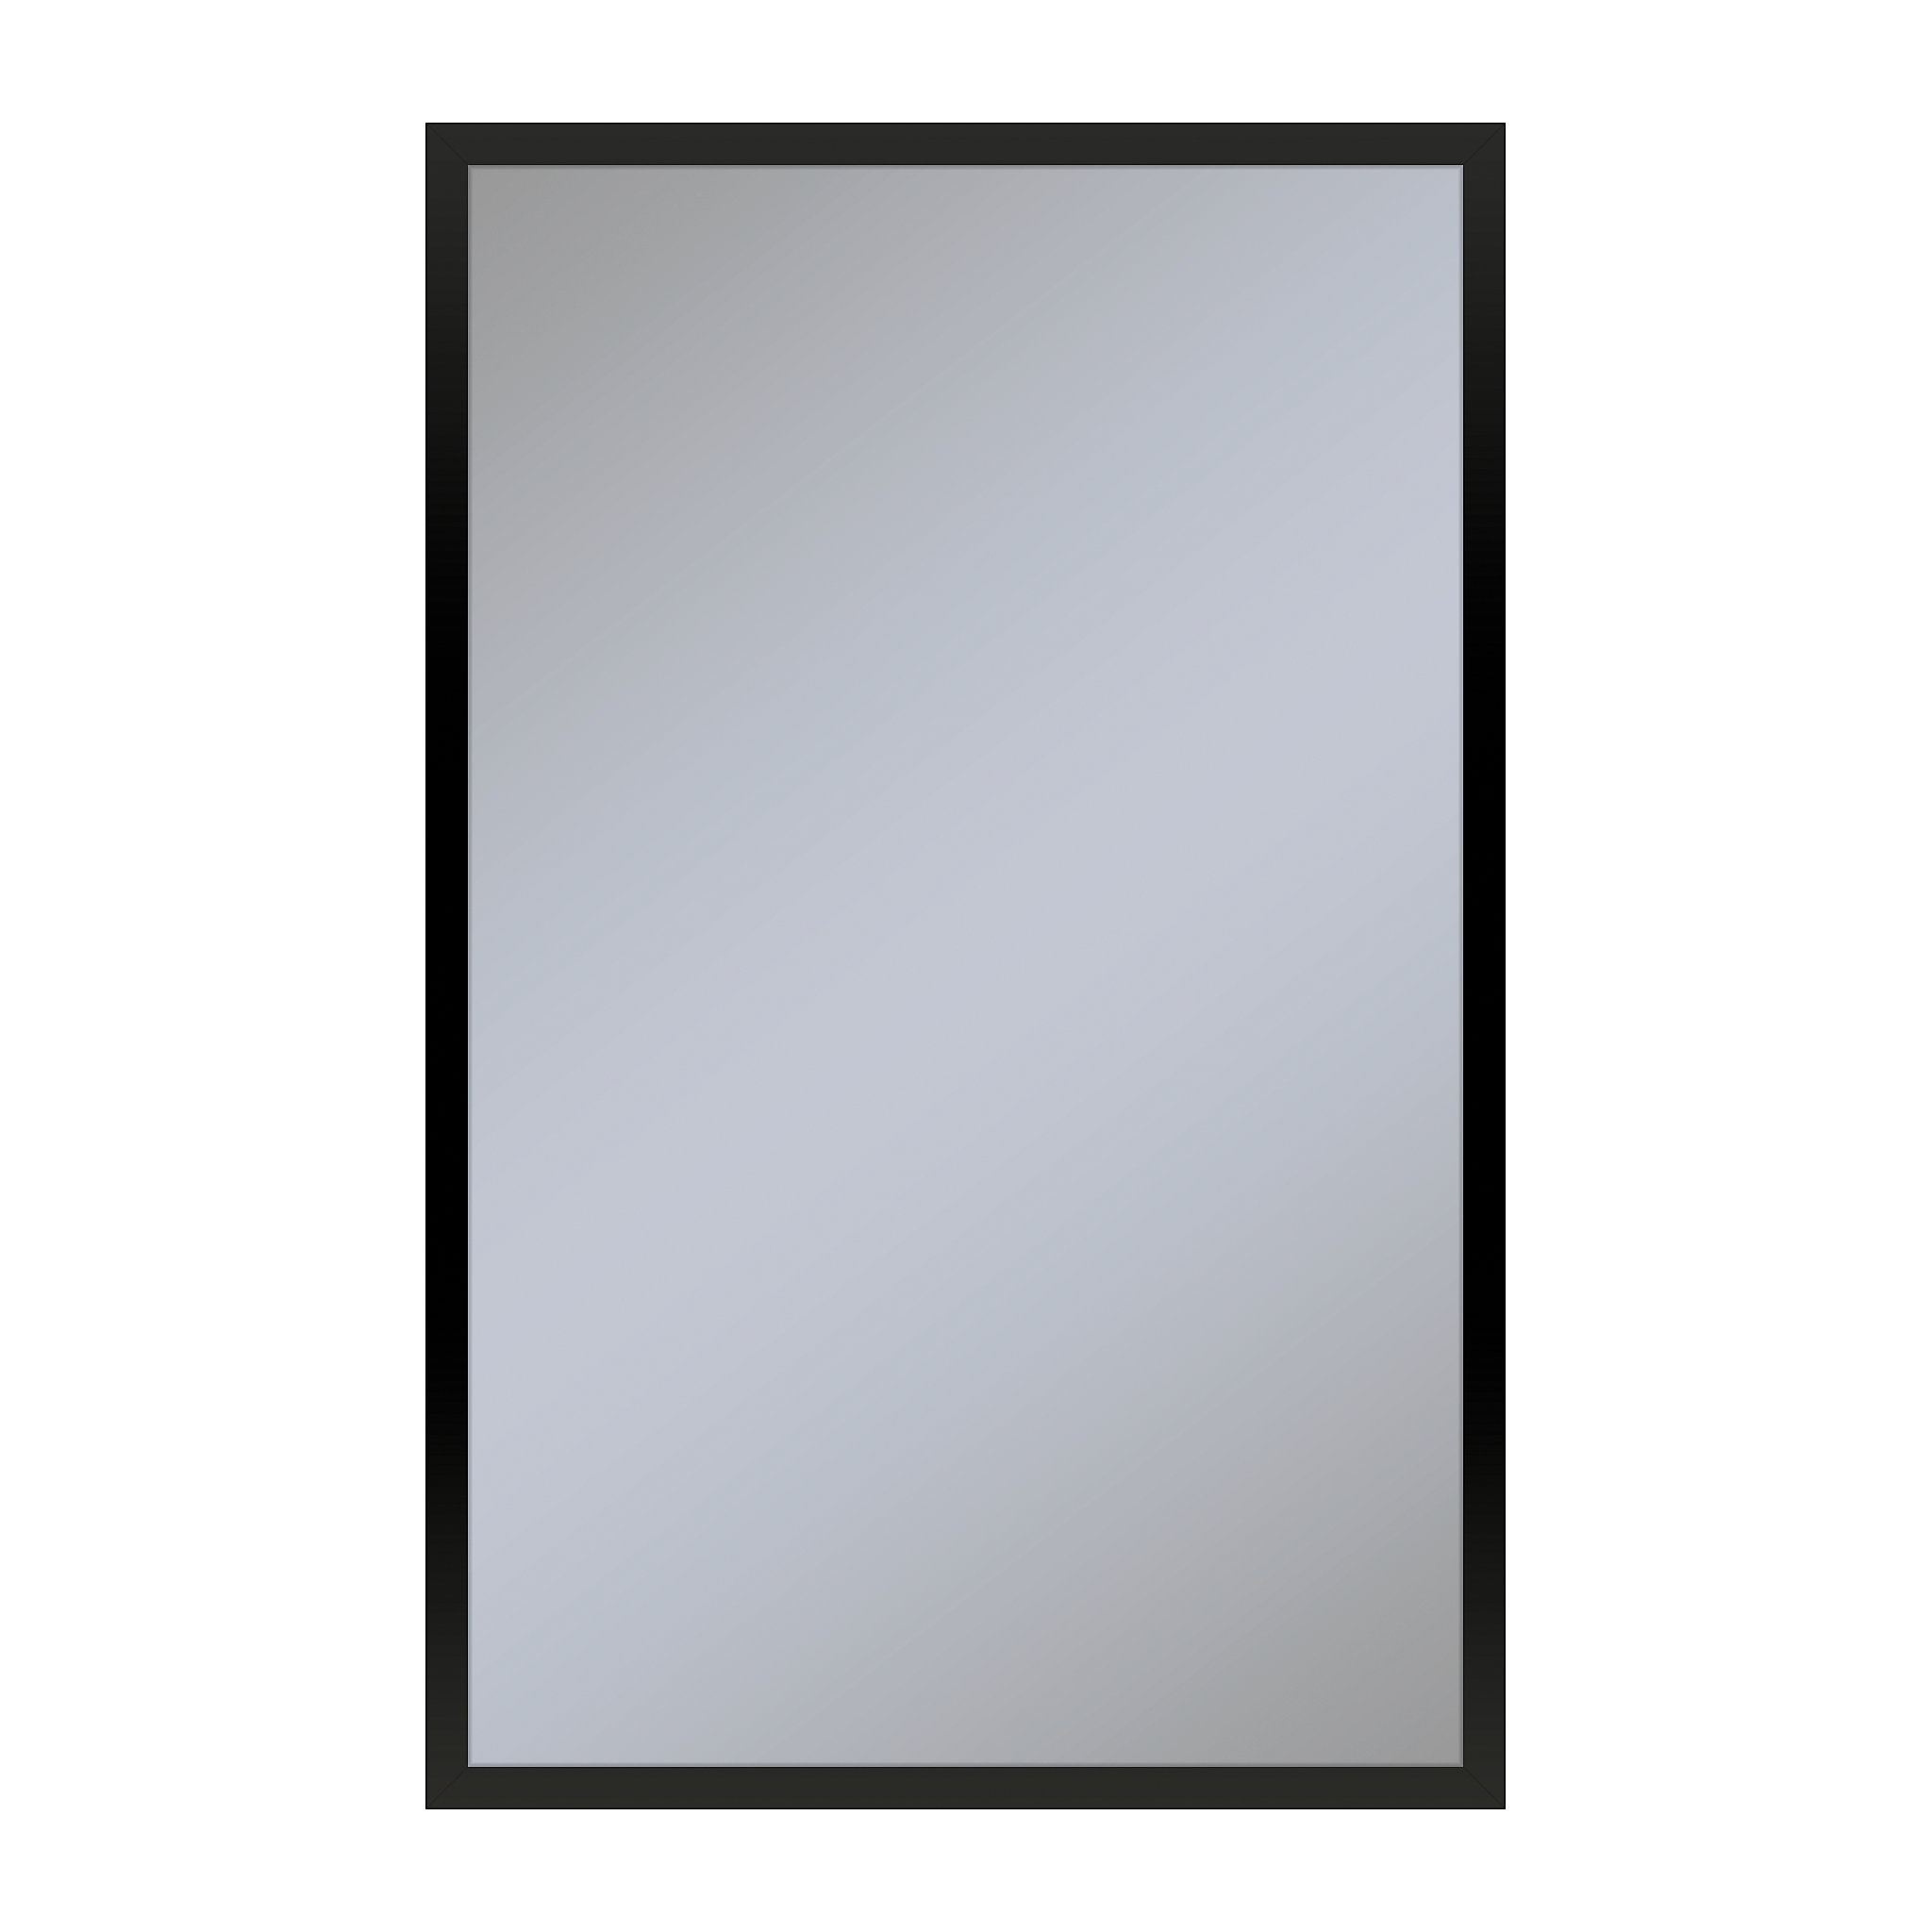 Robern PC2030D6TNN83 Profiles Framed Cabinet, 20" x 30" x 6", Matte Black, Non-Electric, Reversible Hinge